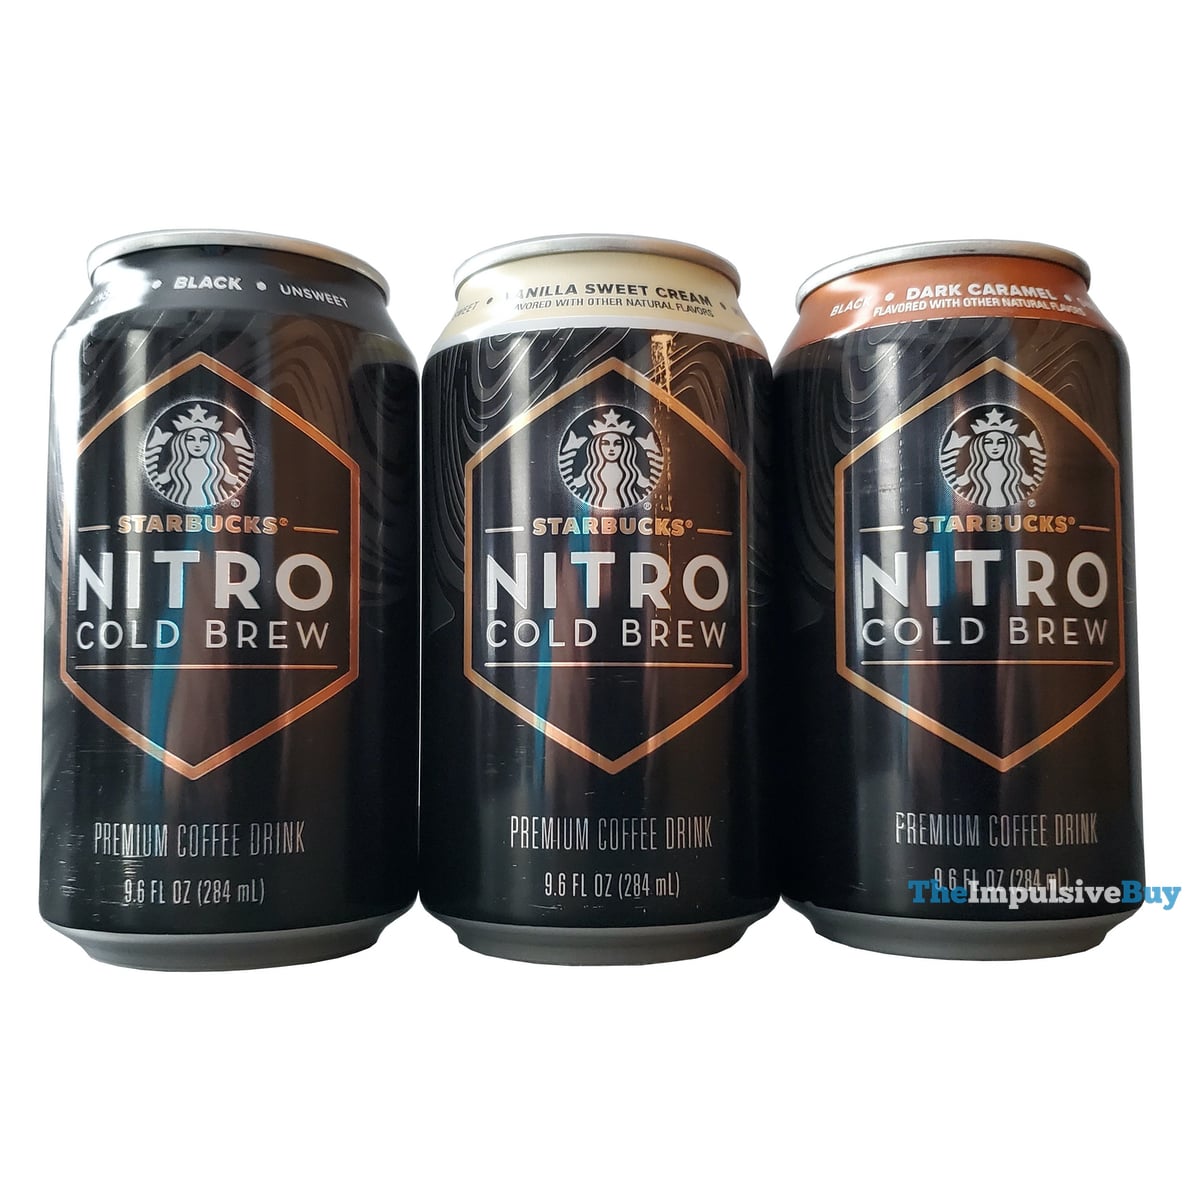 https://www.theimpulsivebuy.com/wordpress/wp-content/uploads/2020/03/Starbucks-Canned-Nitro-Cold-Brew.jpeg